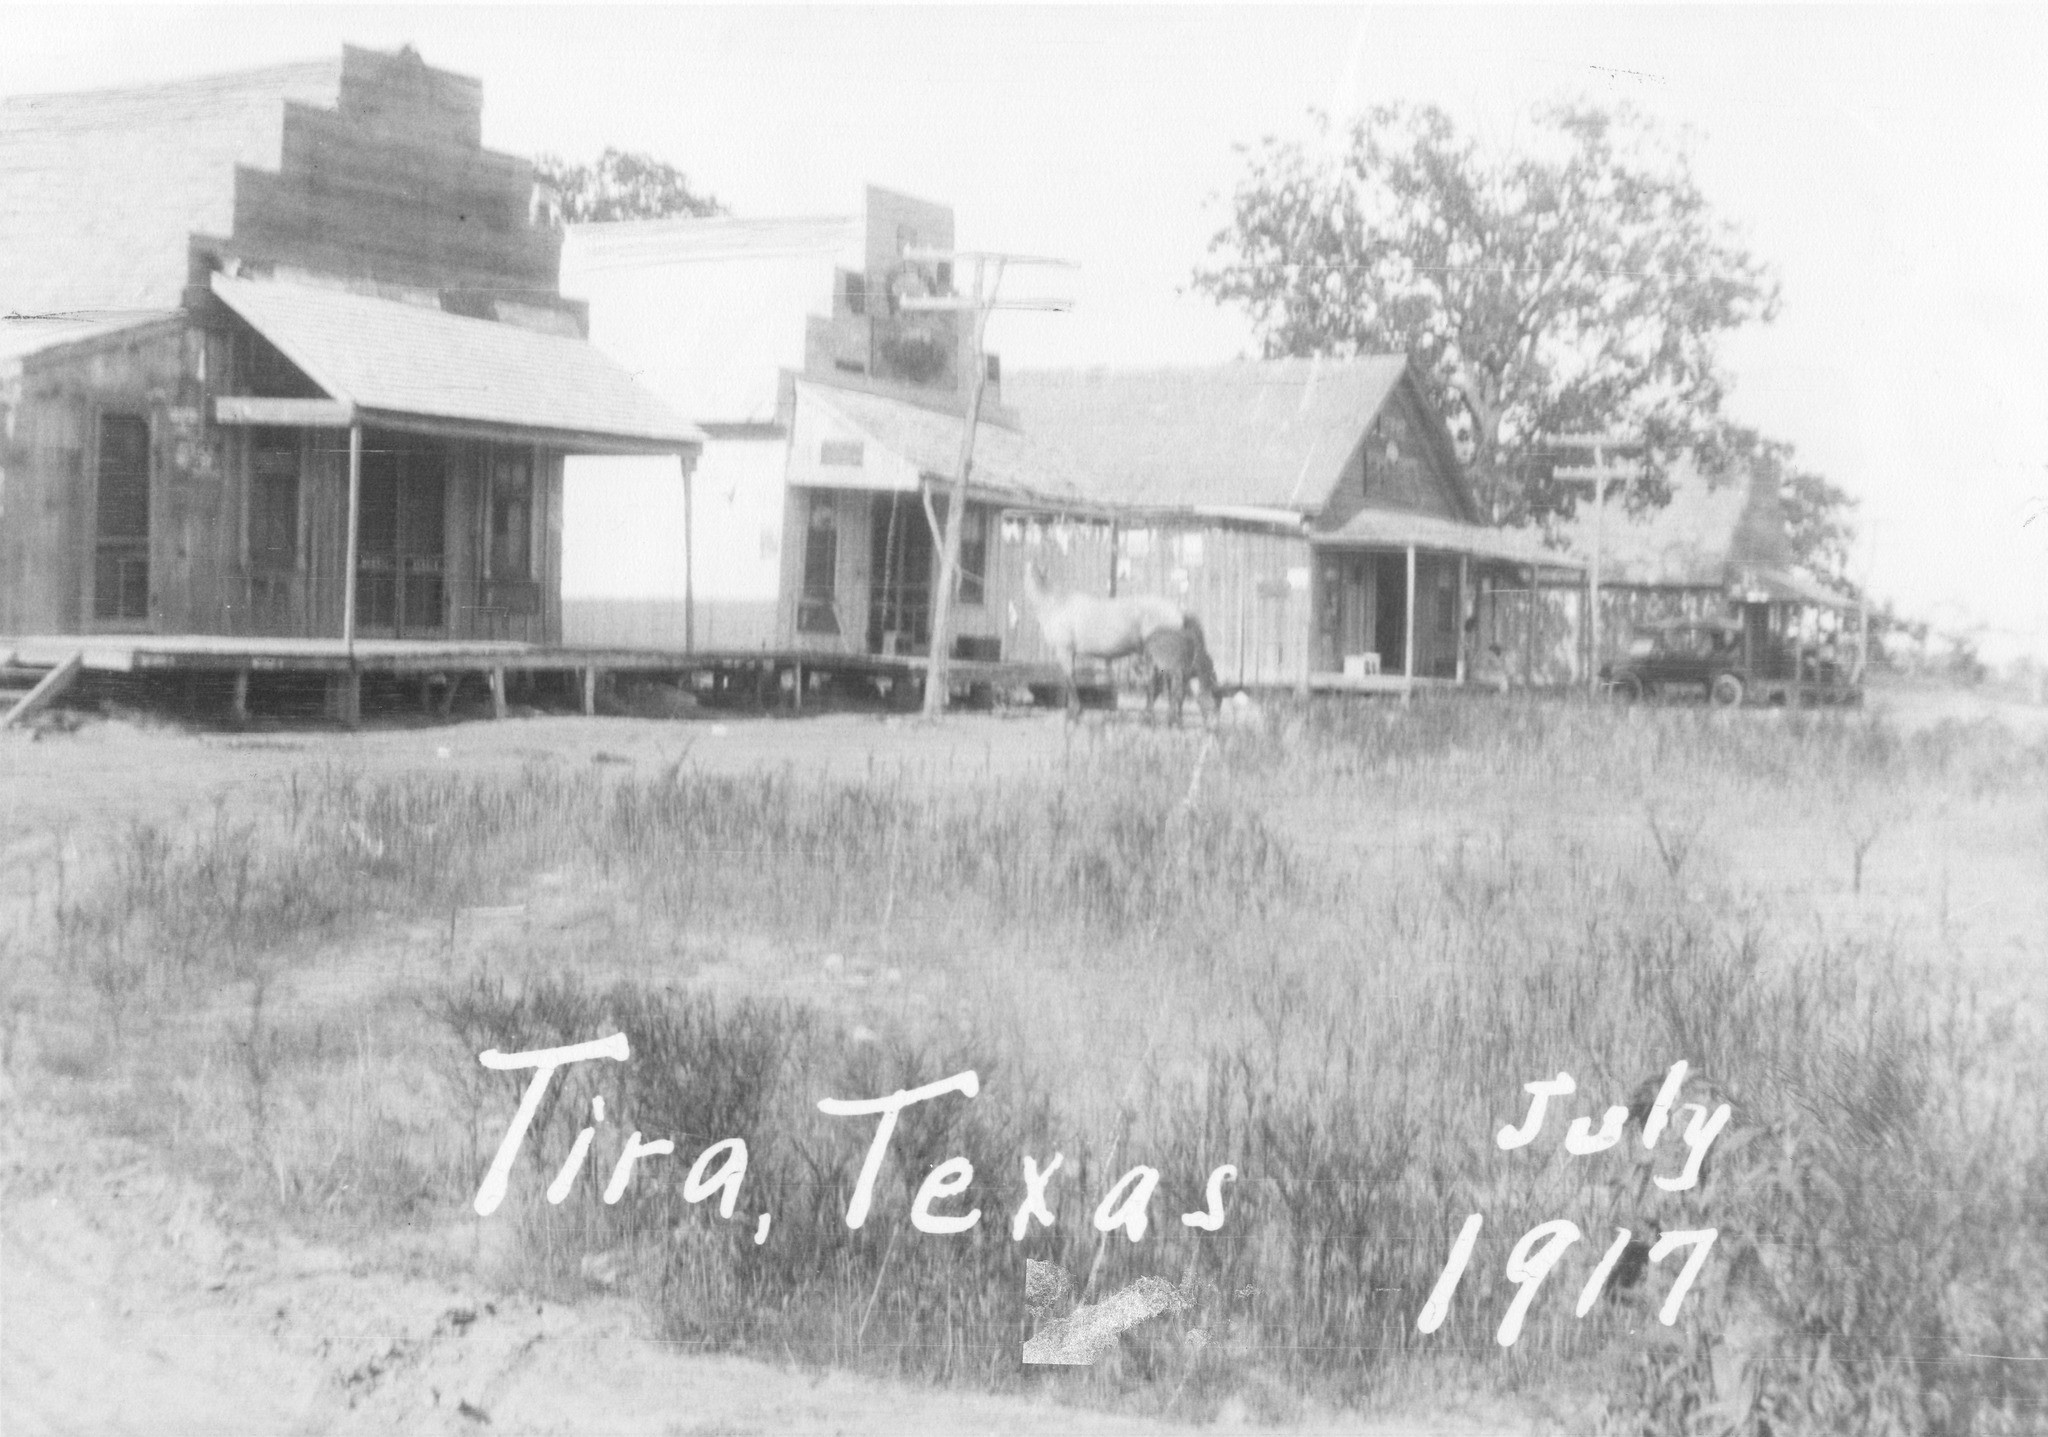 History of Tira, Texas